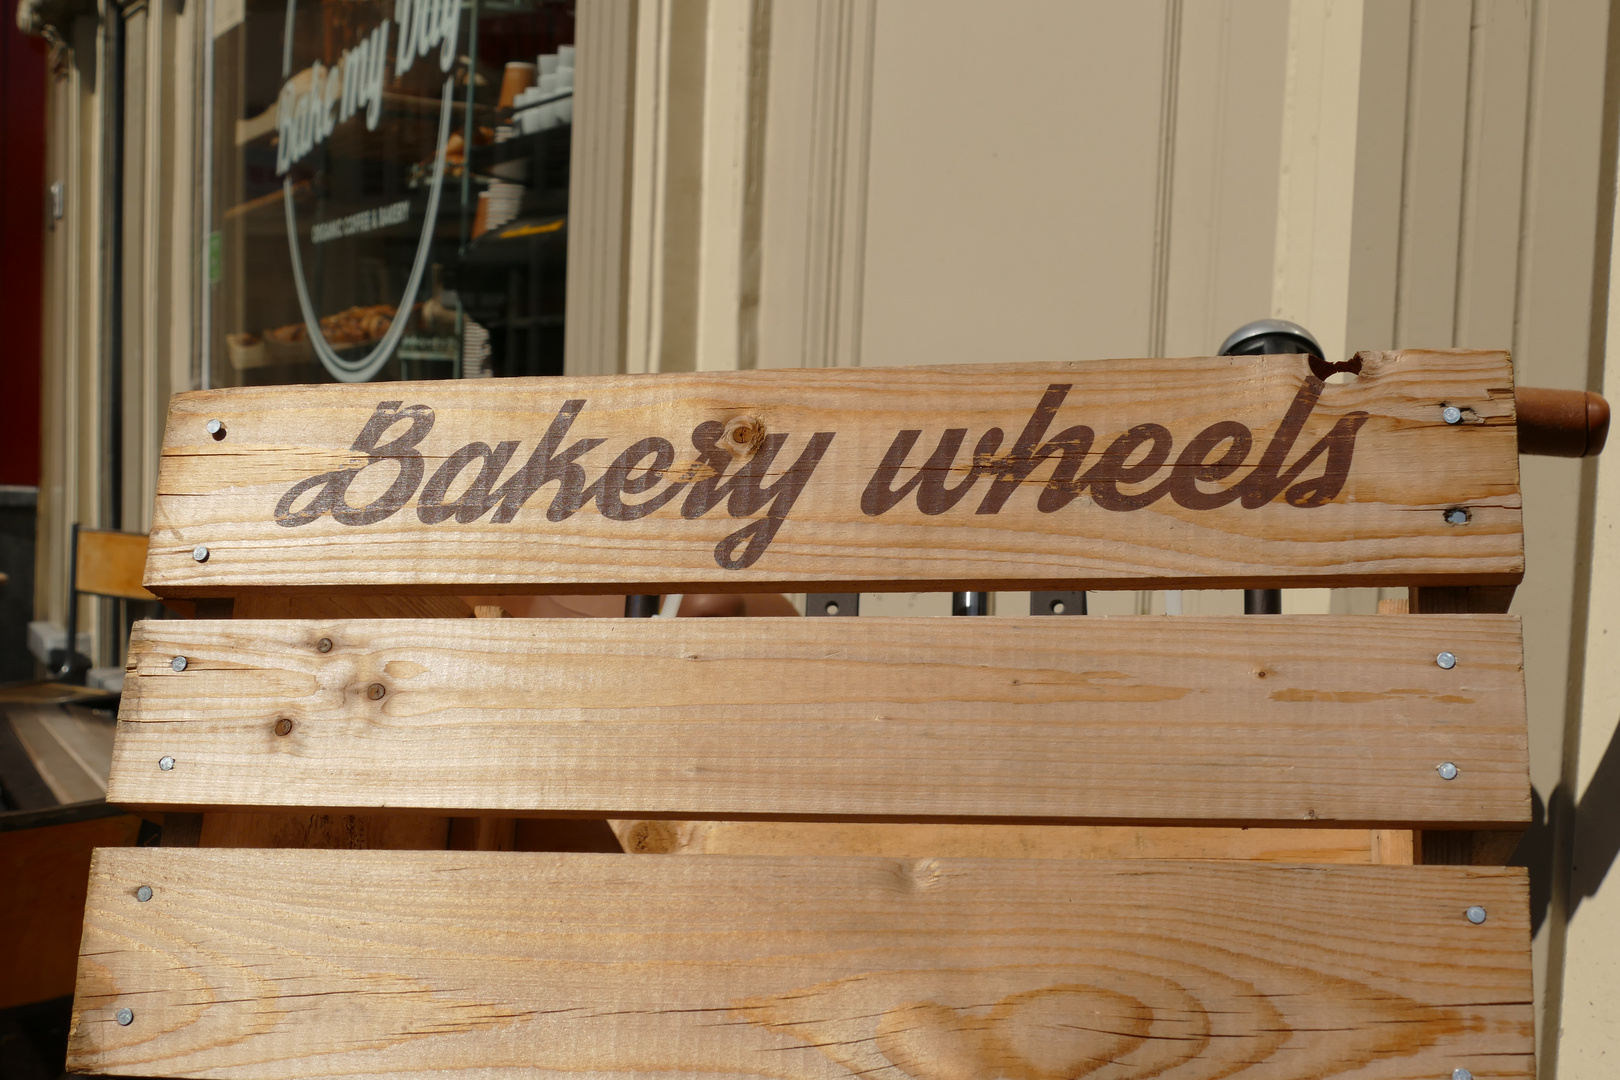 Bakery wheels